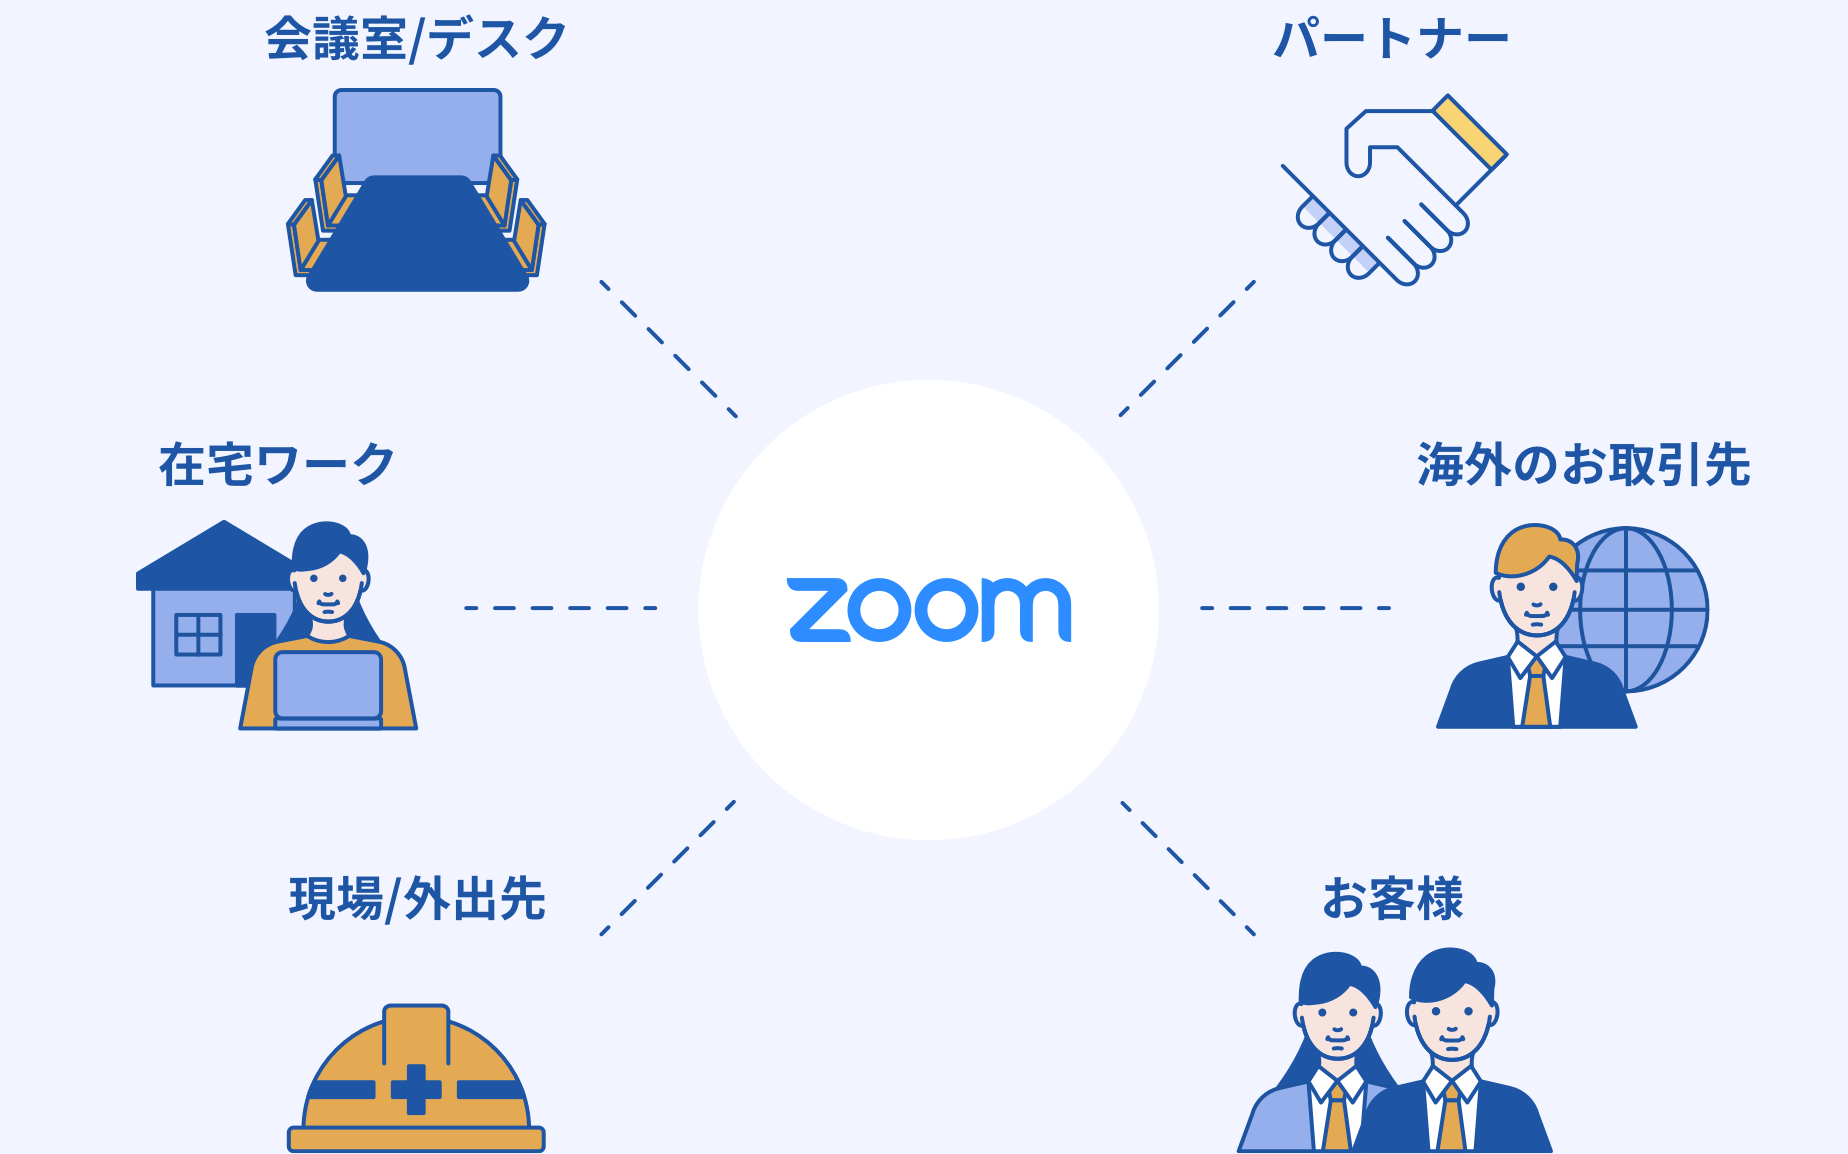 Zoom活用による「テレワークの実現」で企業・組織の生産性が向上！